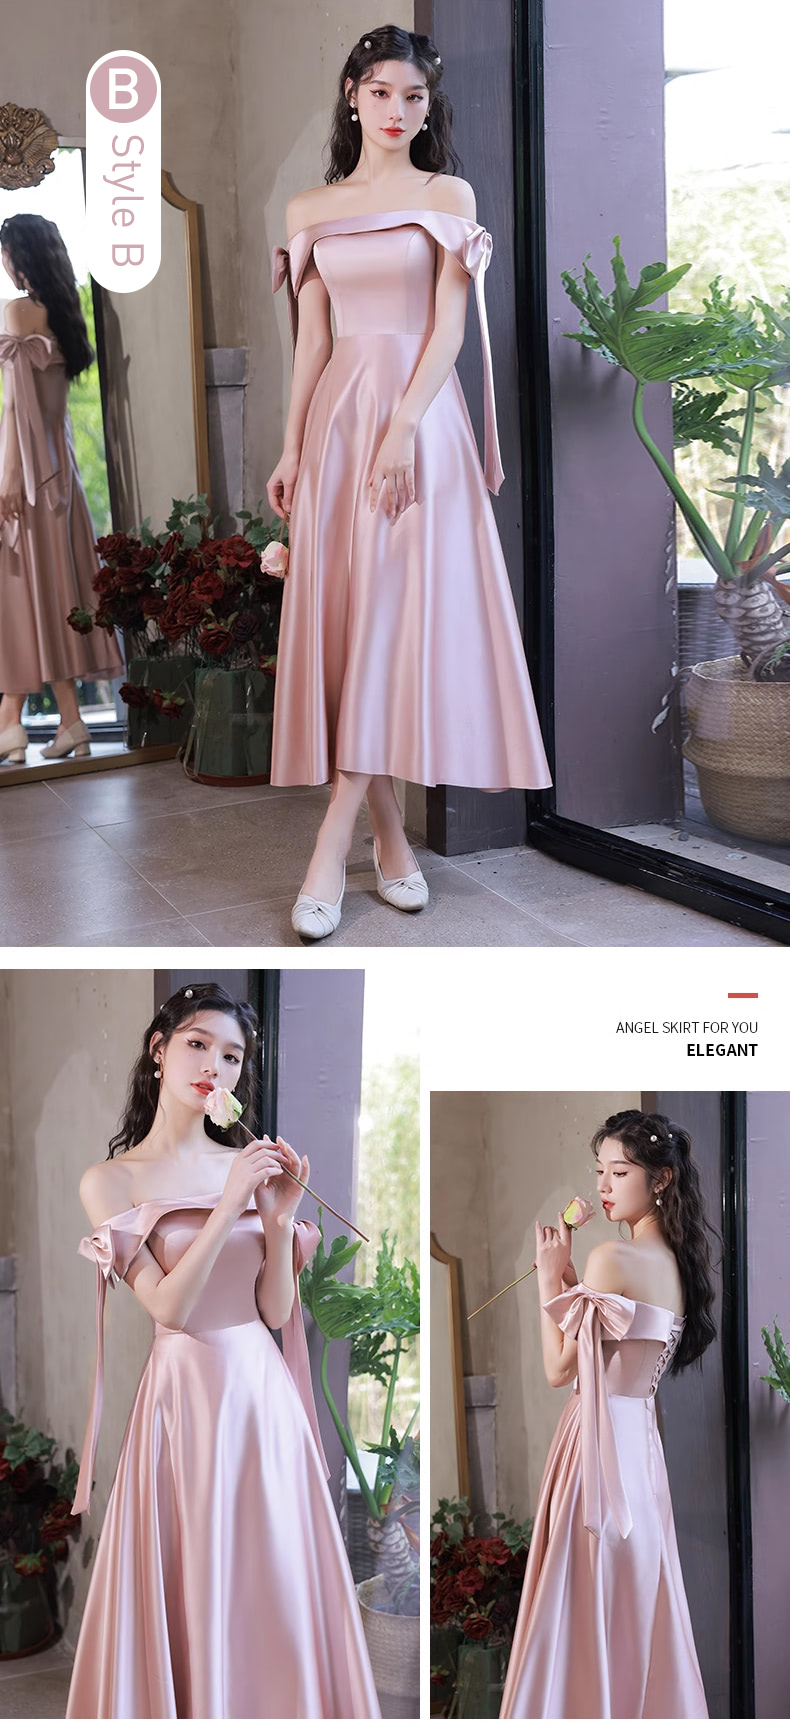 Simple-Pink-Satin-Bridesmaid-Midi-Dress-Homecoming-Graduation-Attire17